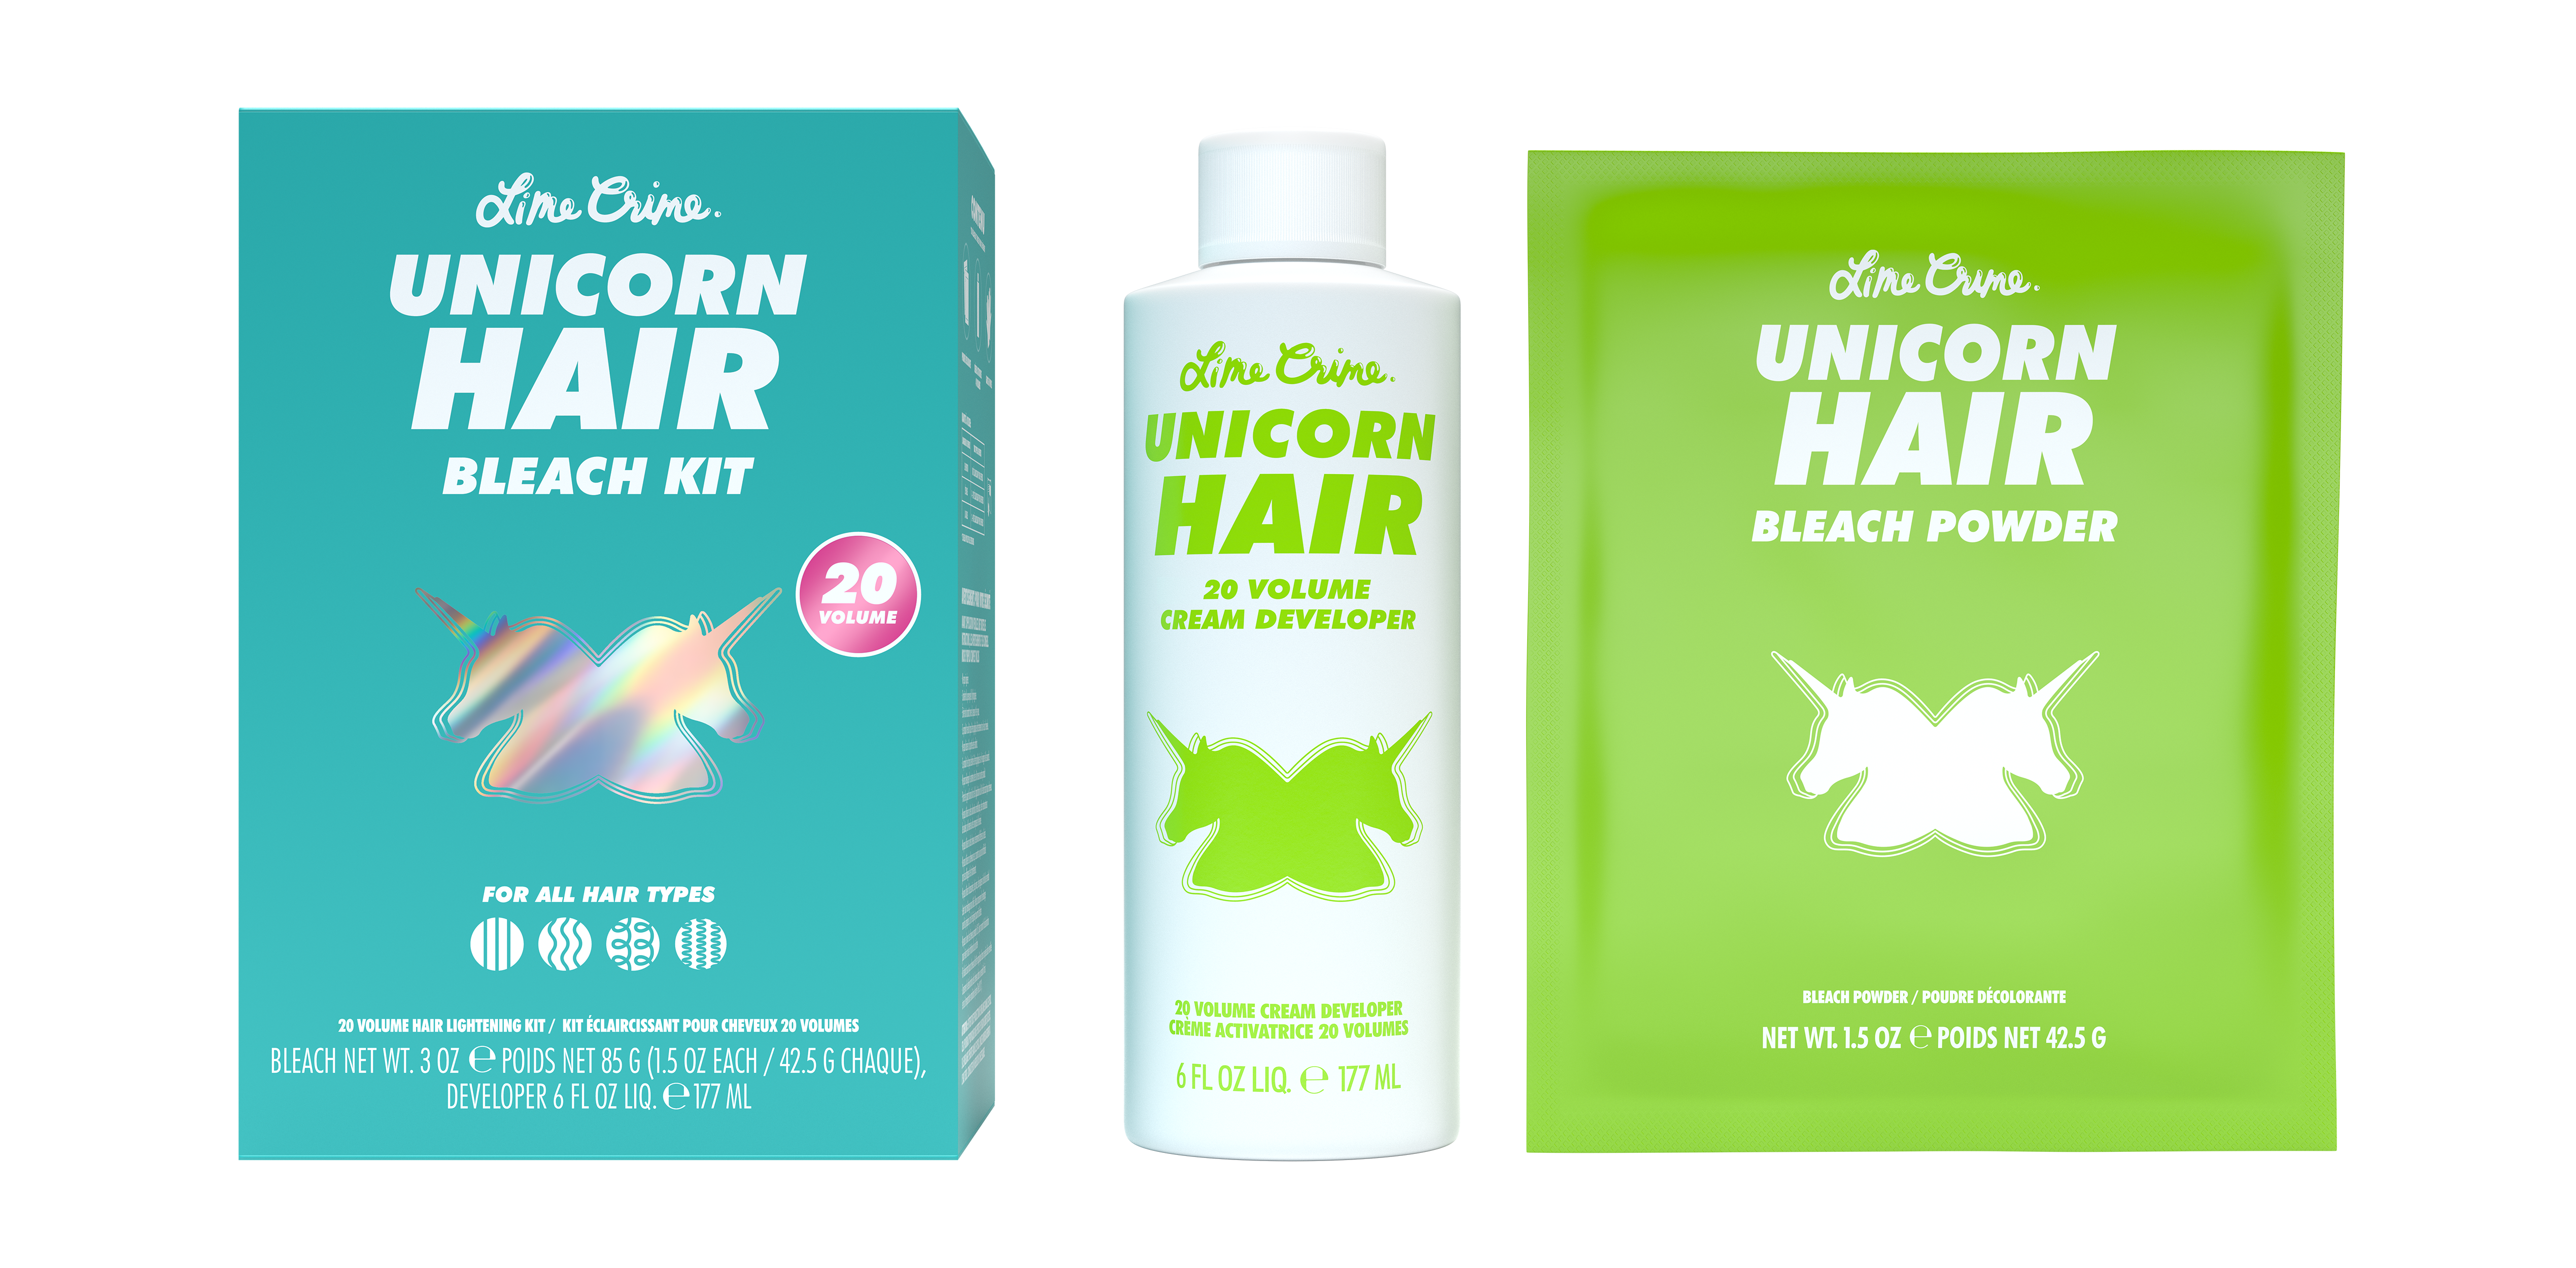 Unicorn Hair Bleach Kit variant:20 Volume Bleach Party